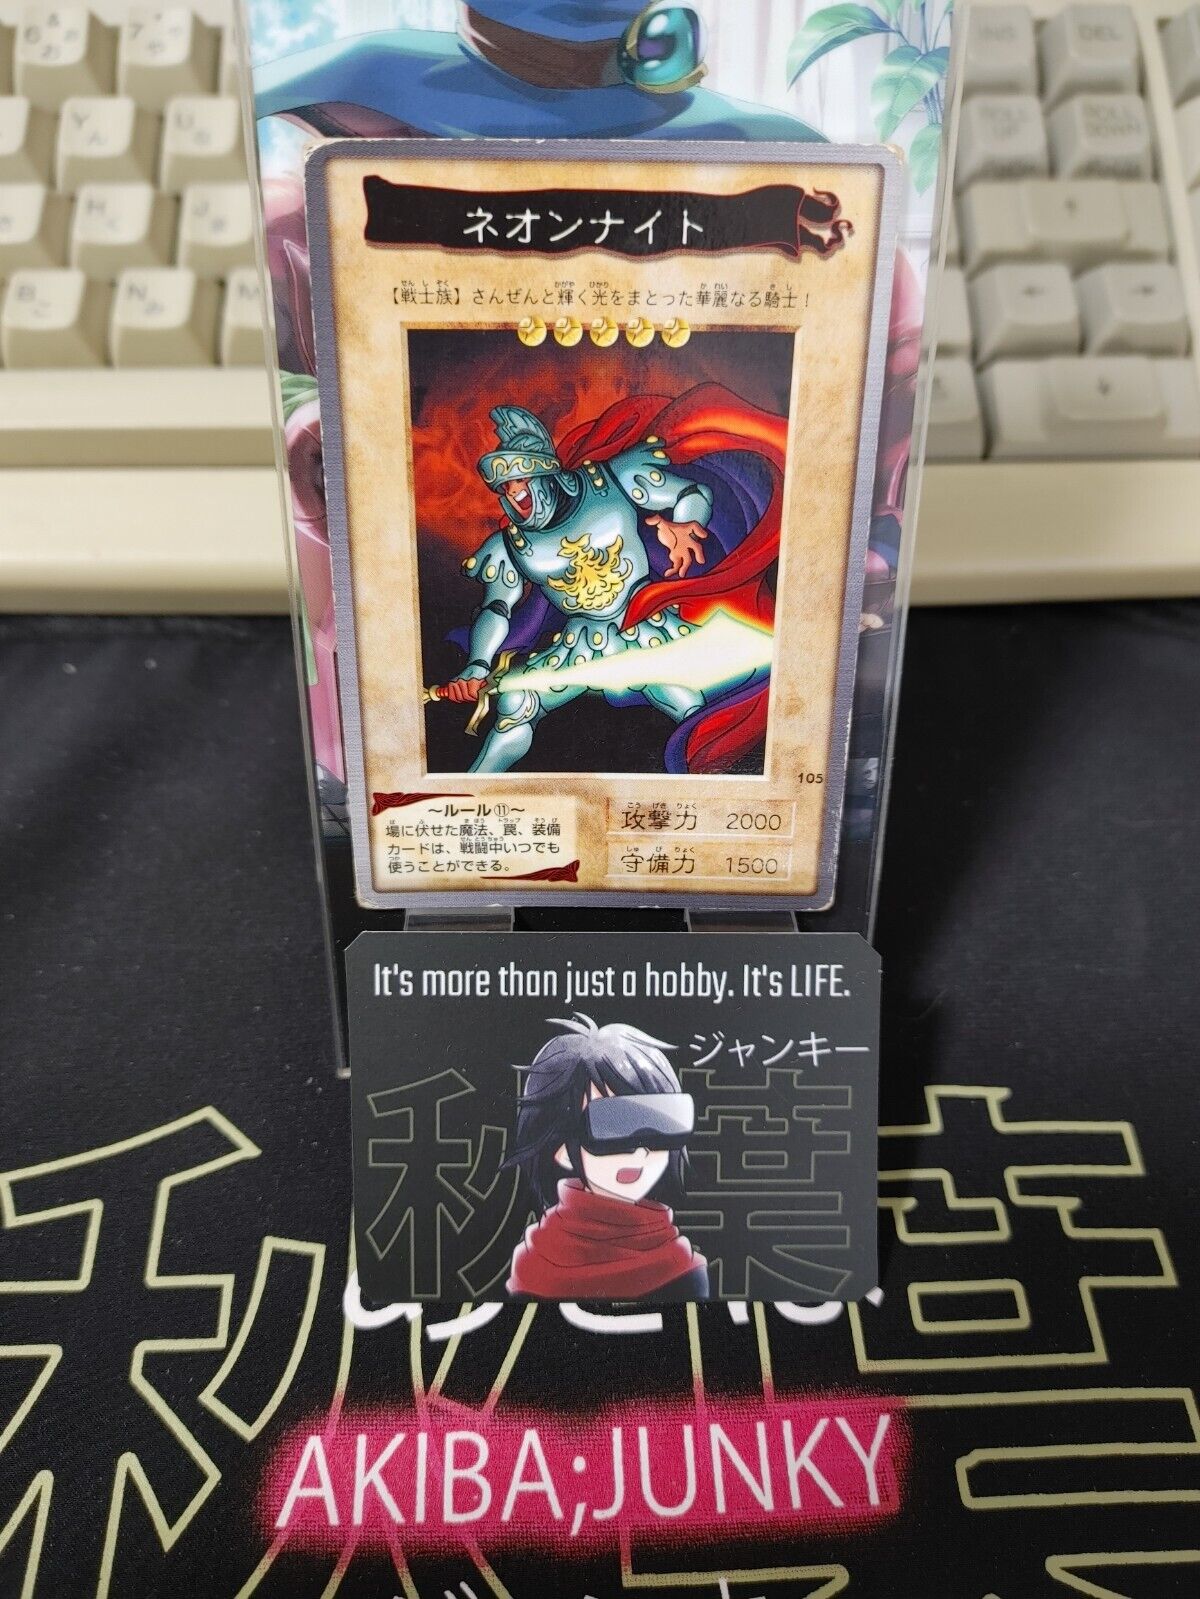 Yu-Gi-Oh Bandai Carddass Card #104 105 Neon Knight Soldier Japanese Retro Japan